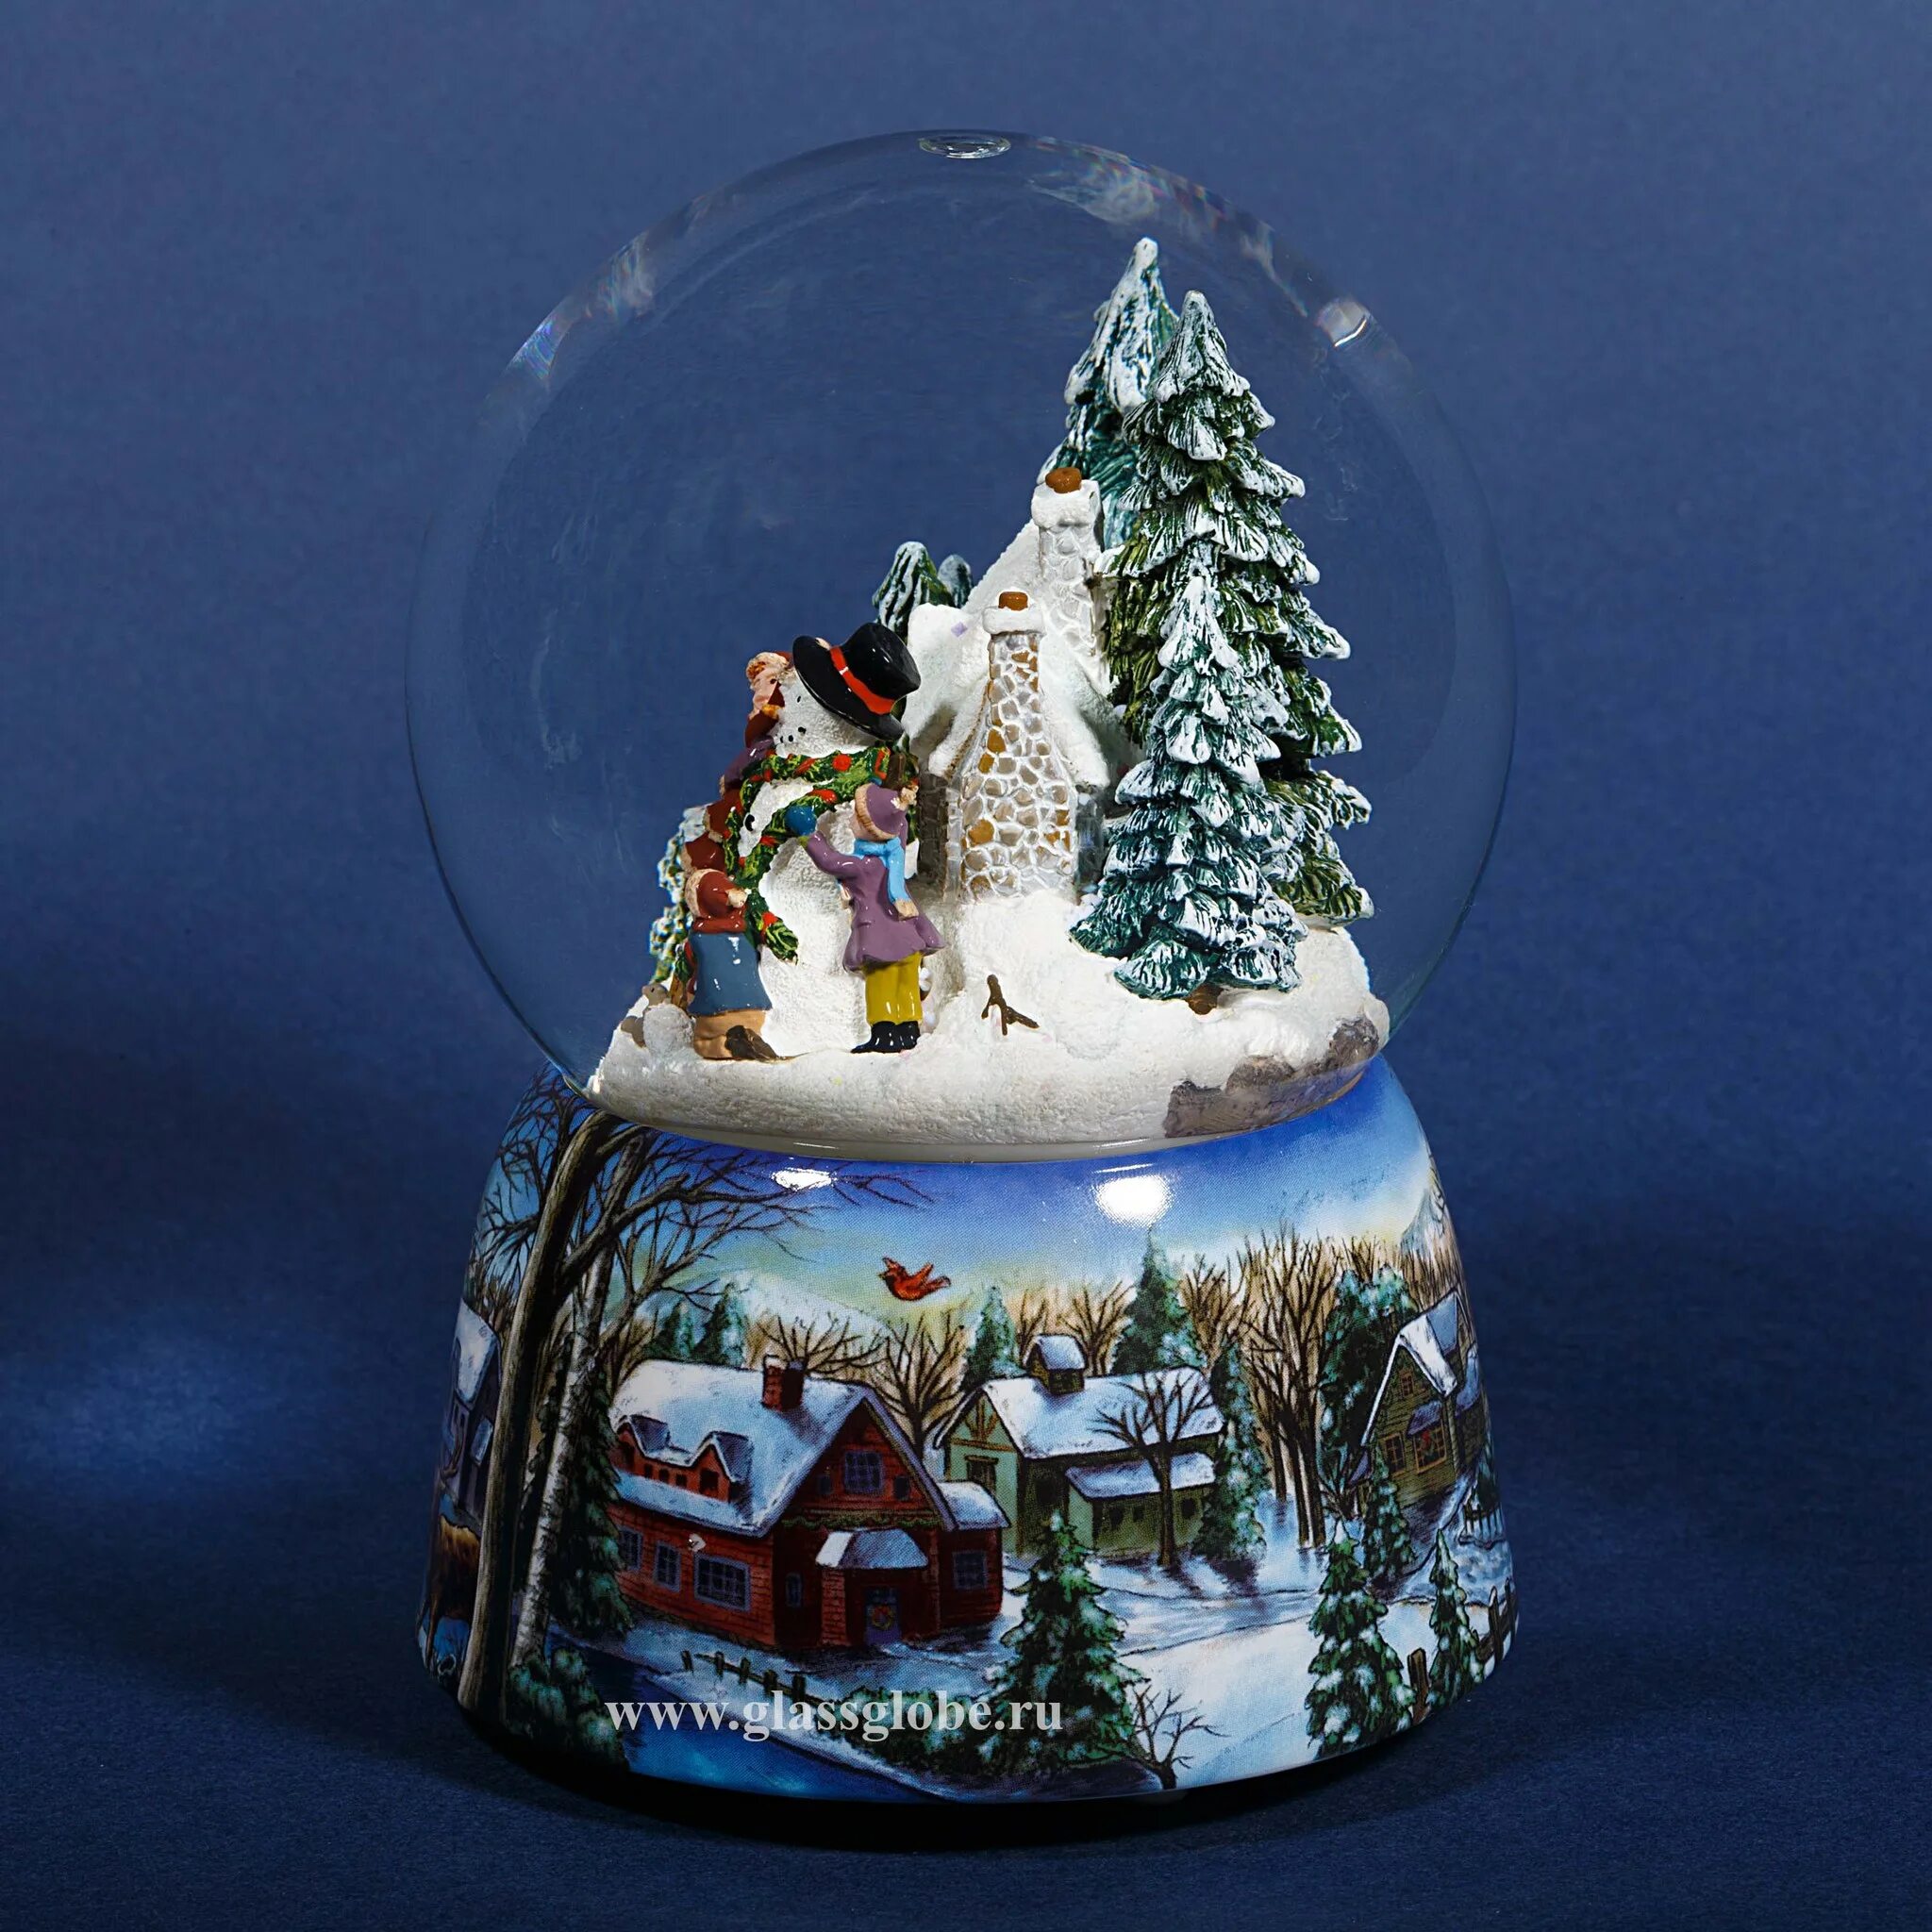 2 снежный шар. Снежный шар. Шар со снегом. Зимний шар. Новогодняя игрушка шар со снегом.